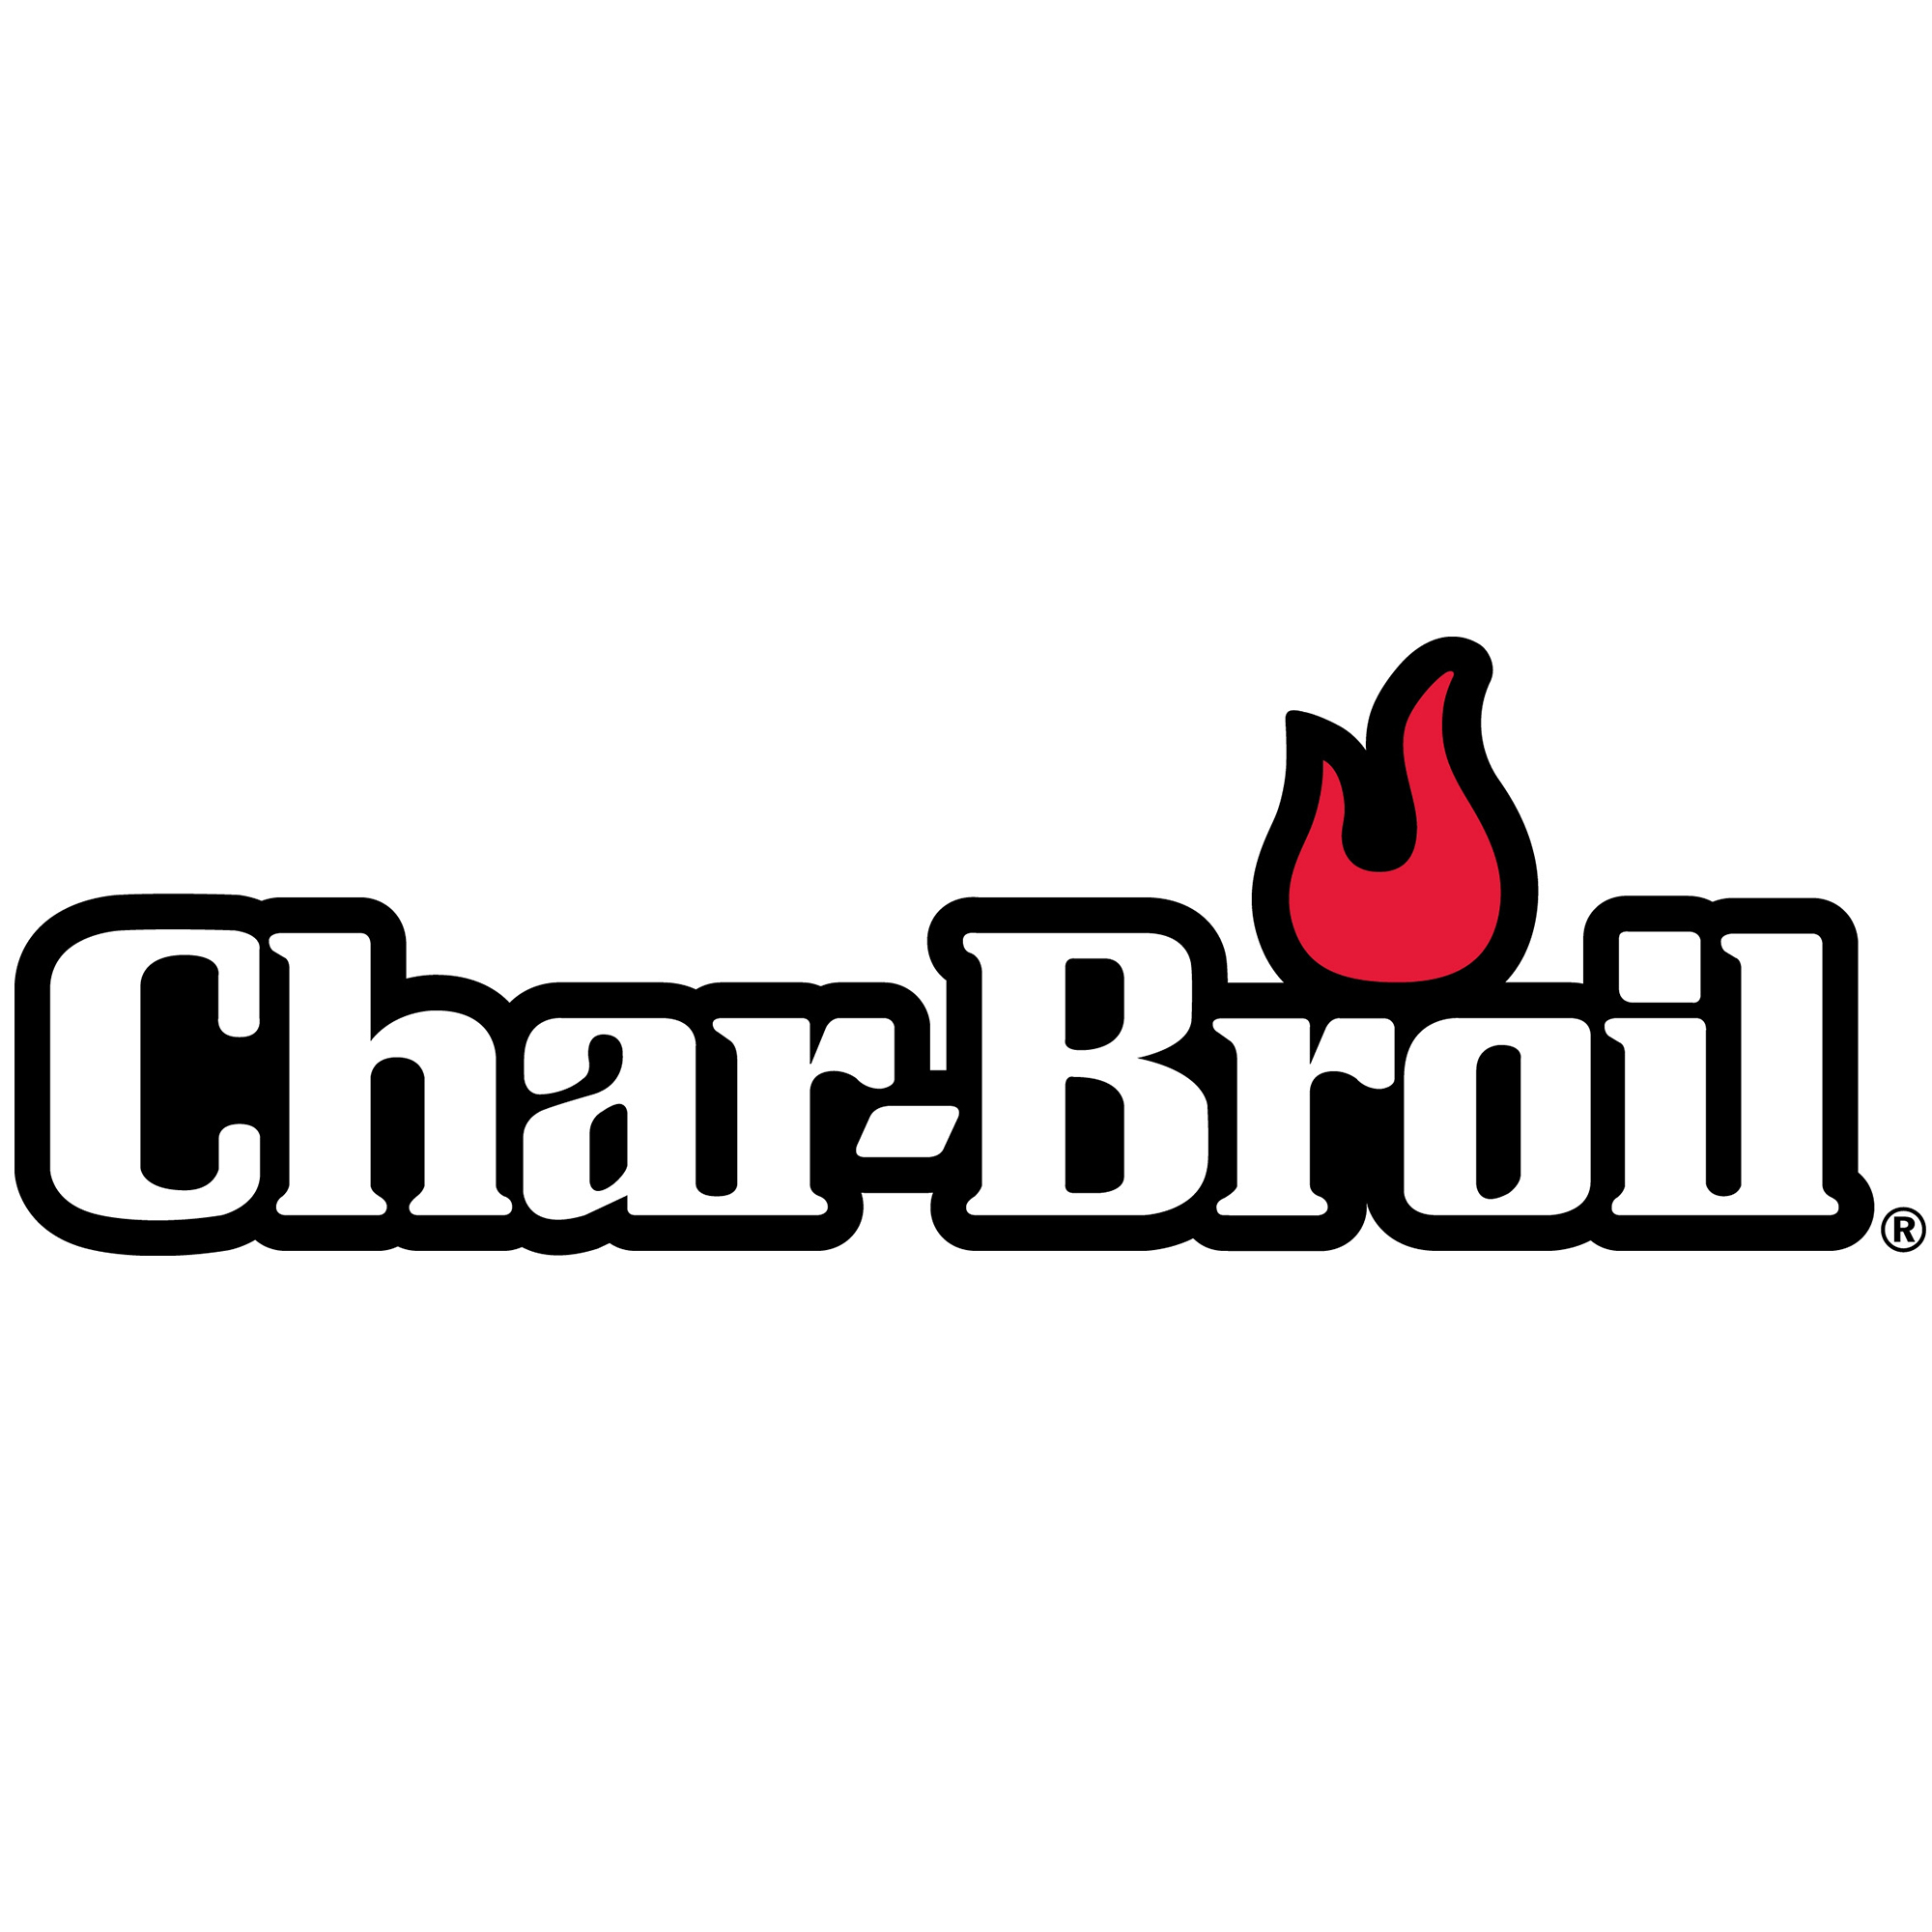 Char-Broil G432-D700-W1 Gas Grill Main Burner Genuine Original Equipment Manufacturer (OEM) Part